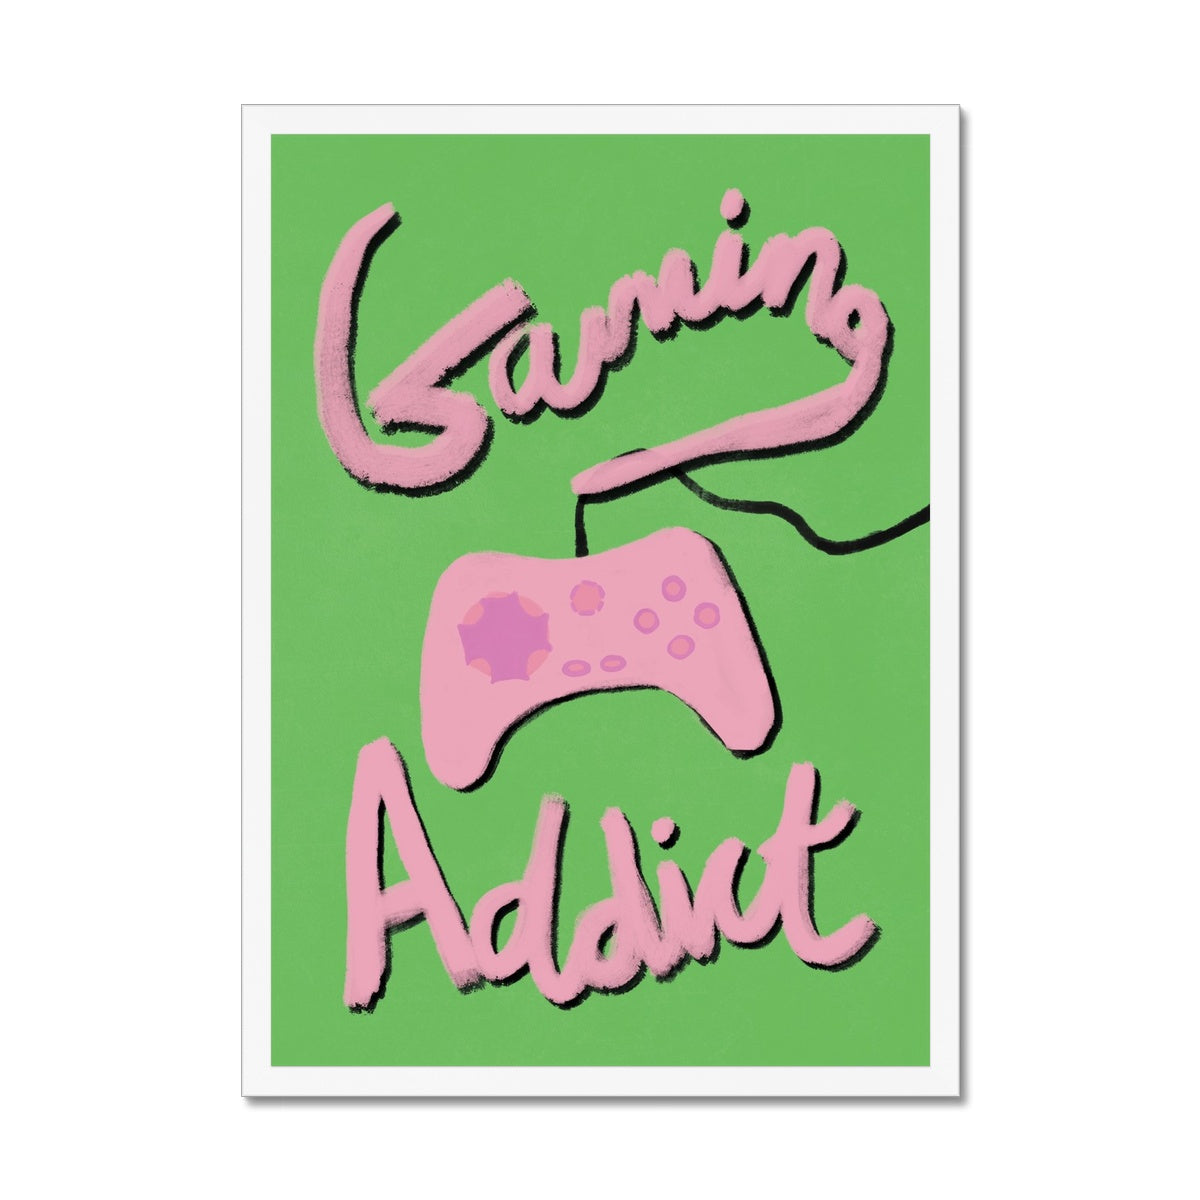 Gaming Addict Print - Green, Pink Framed Print